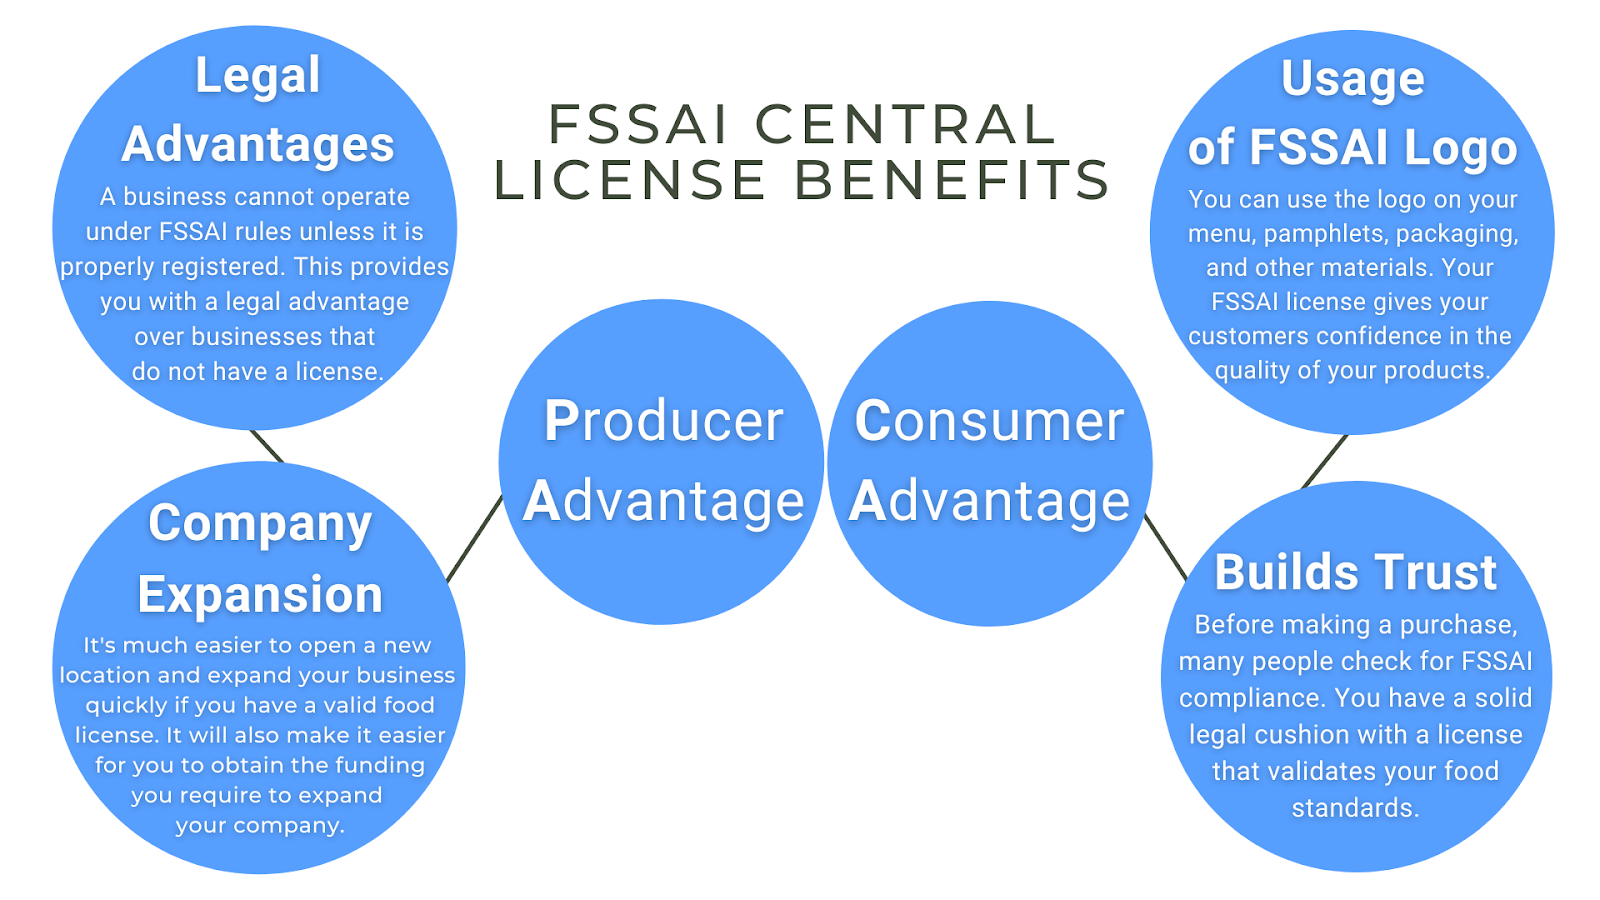 Benefits of FSSAI Central License